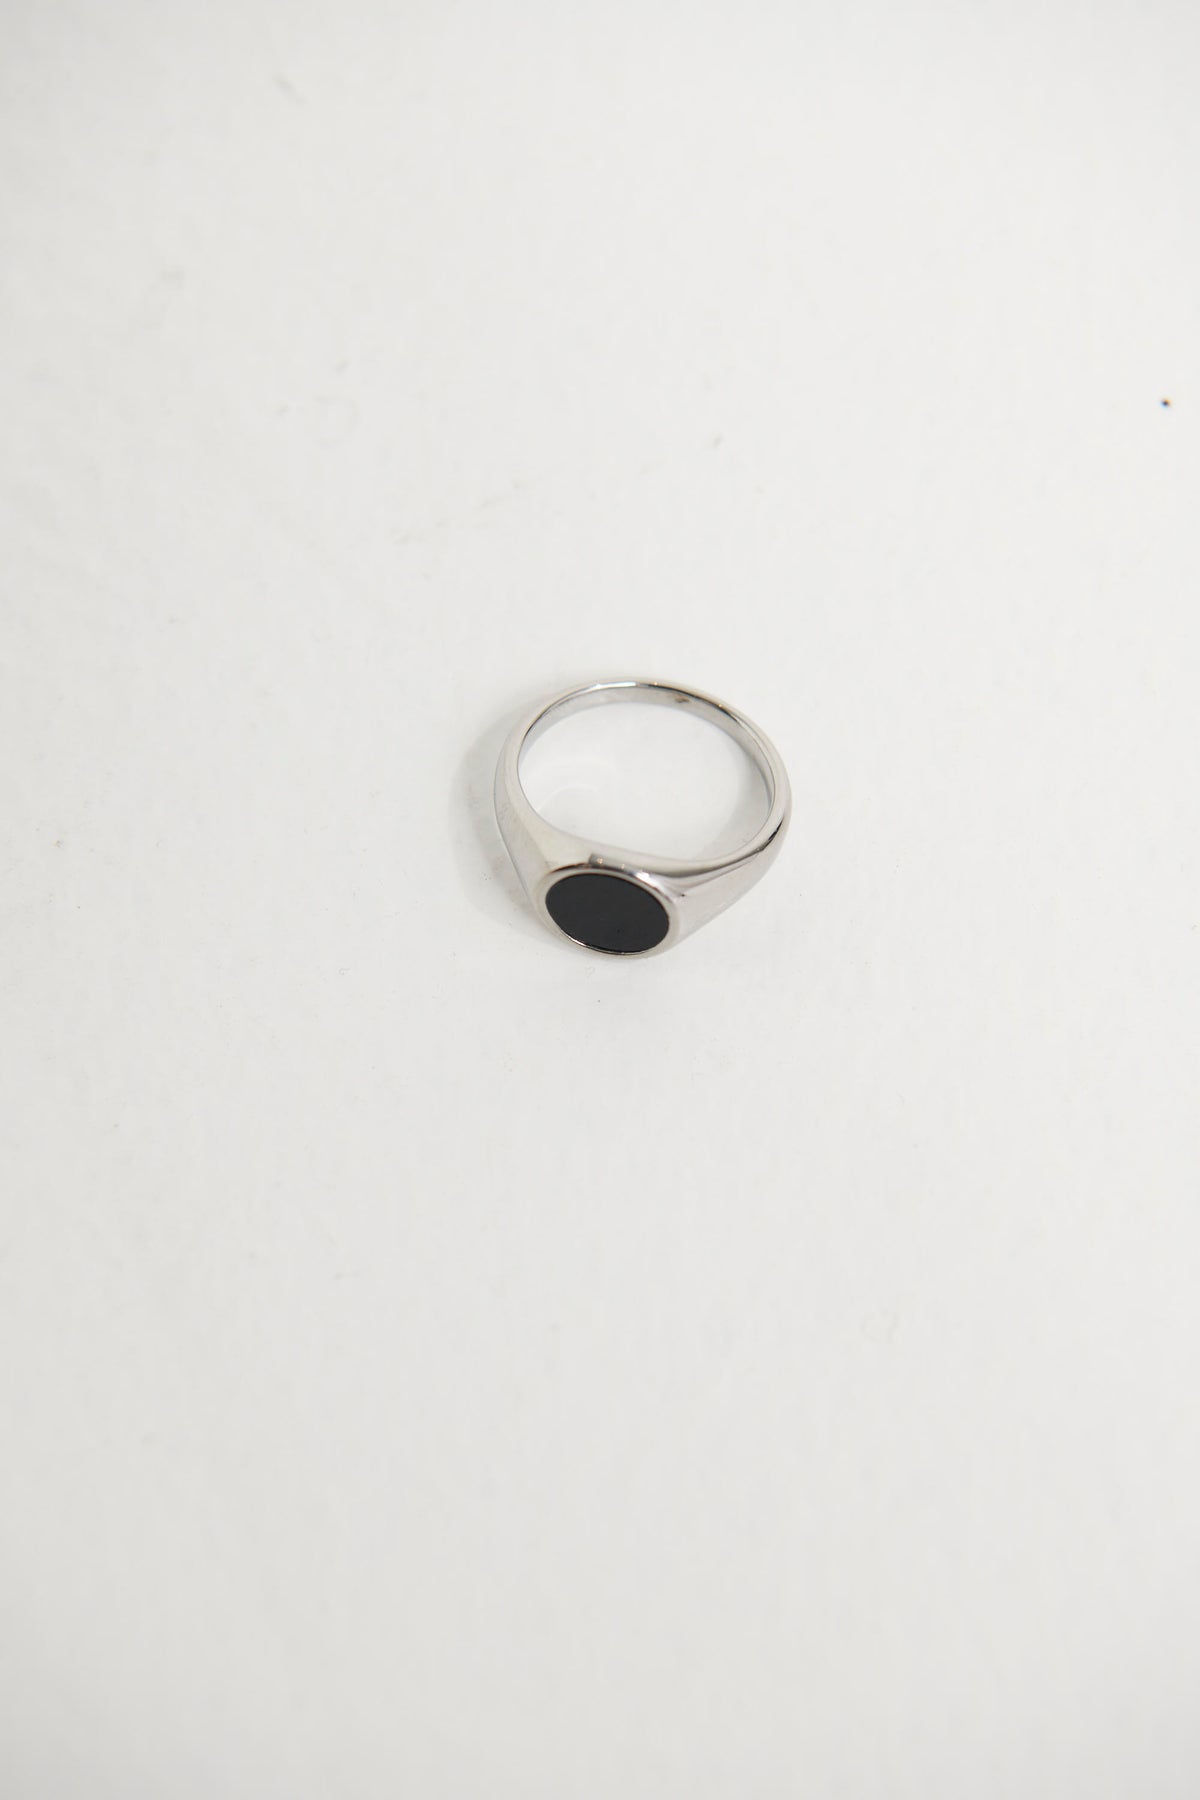 NTH Signet Ring Black/Silver